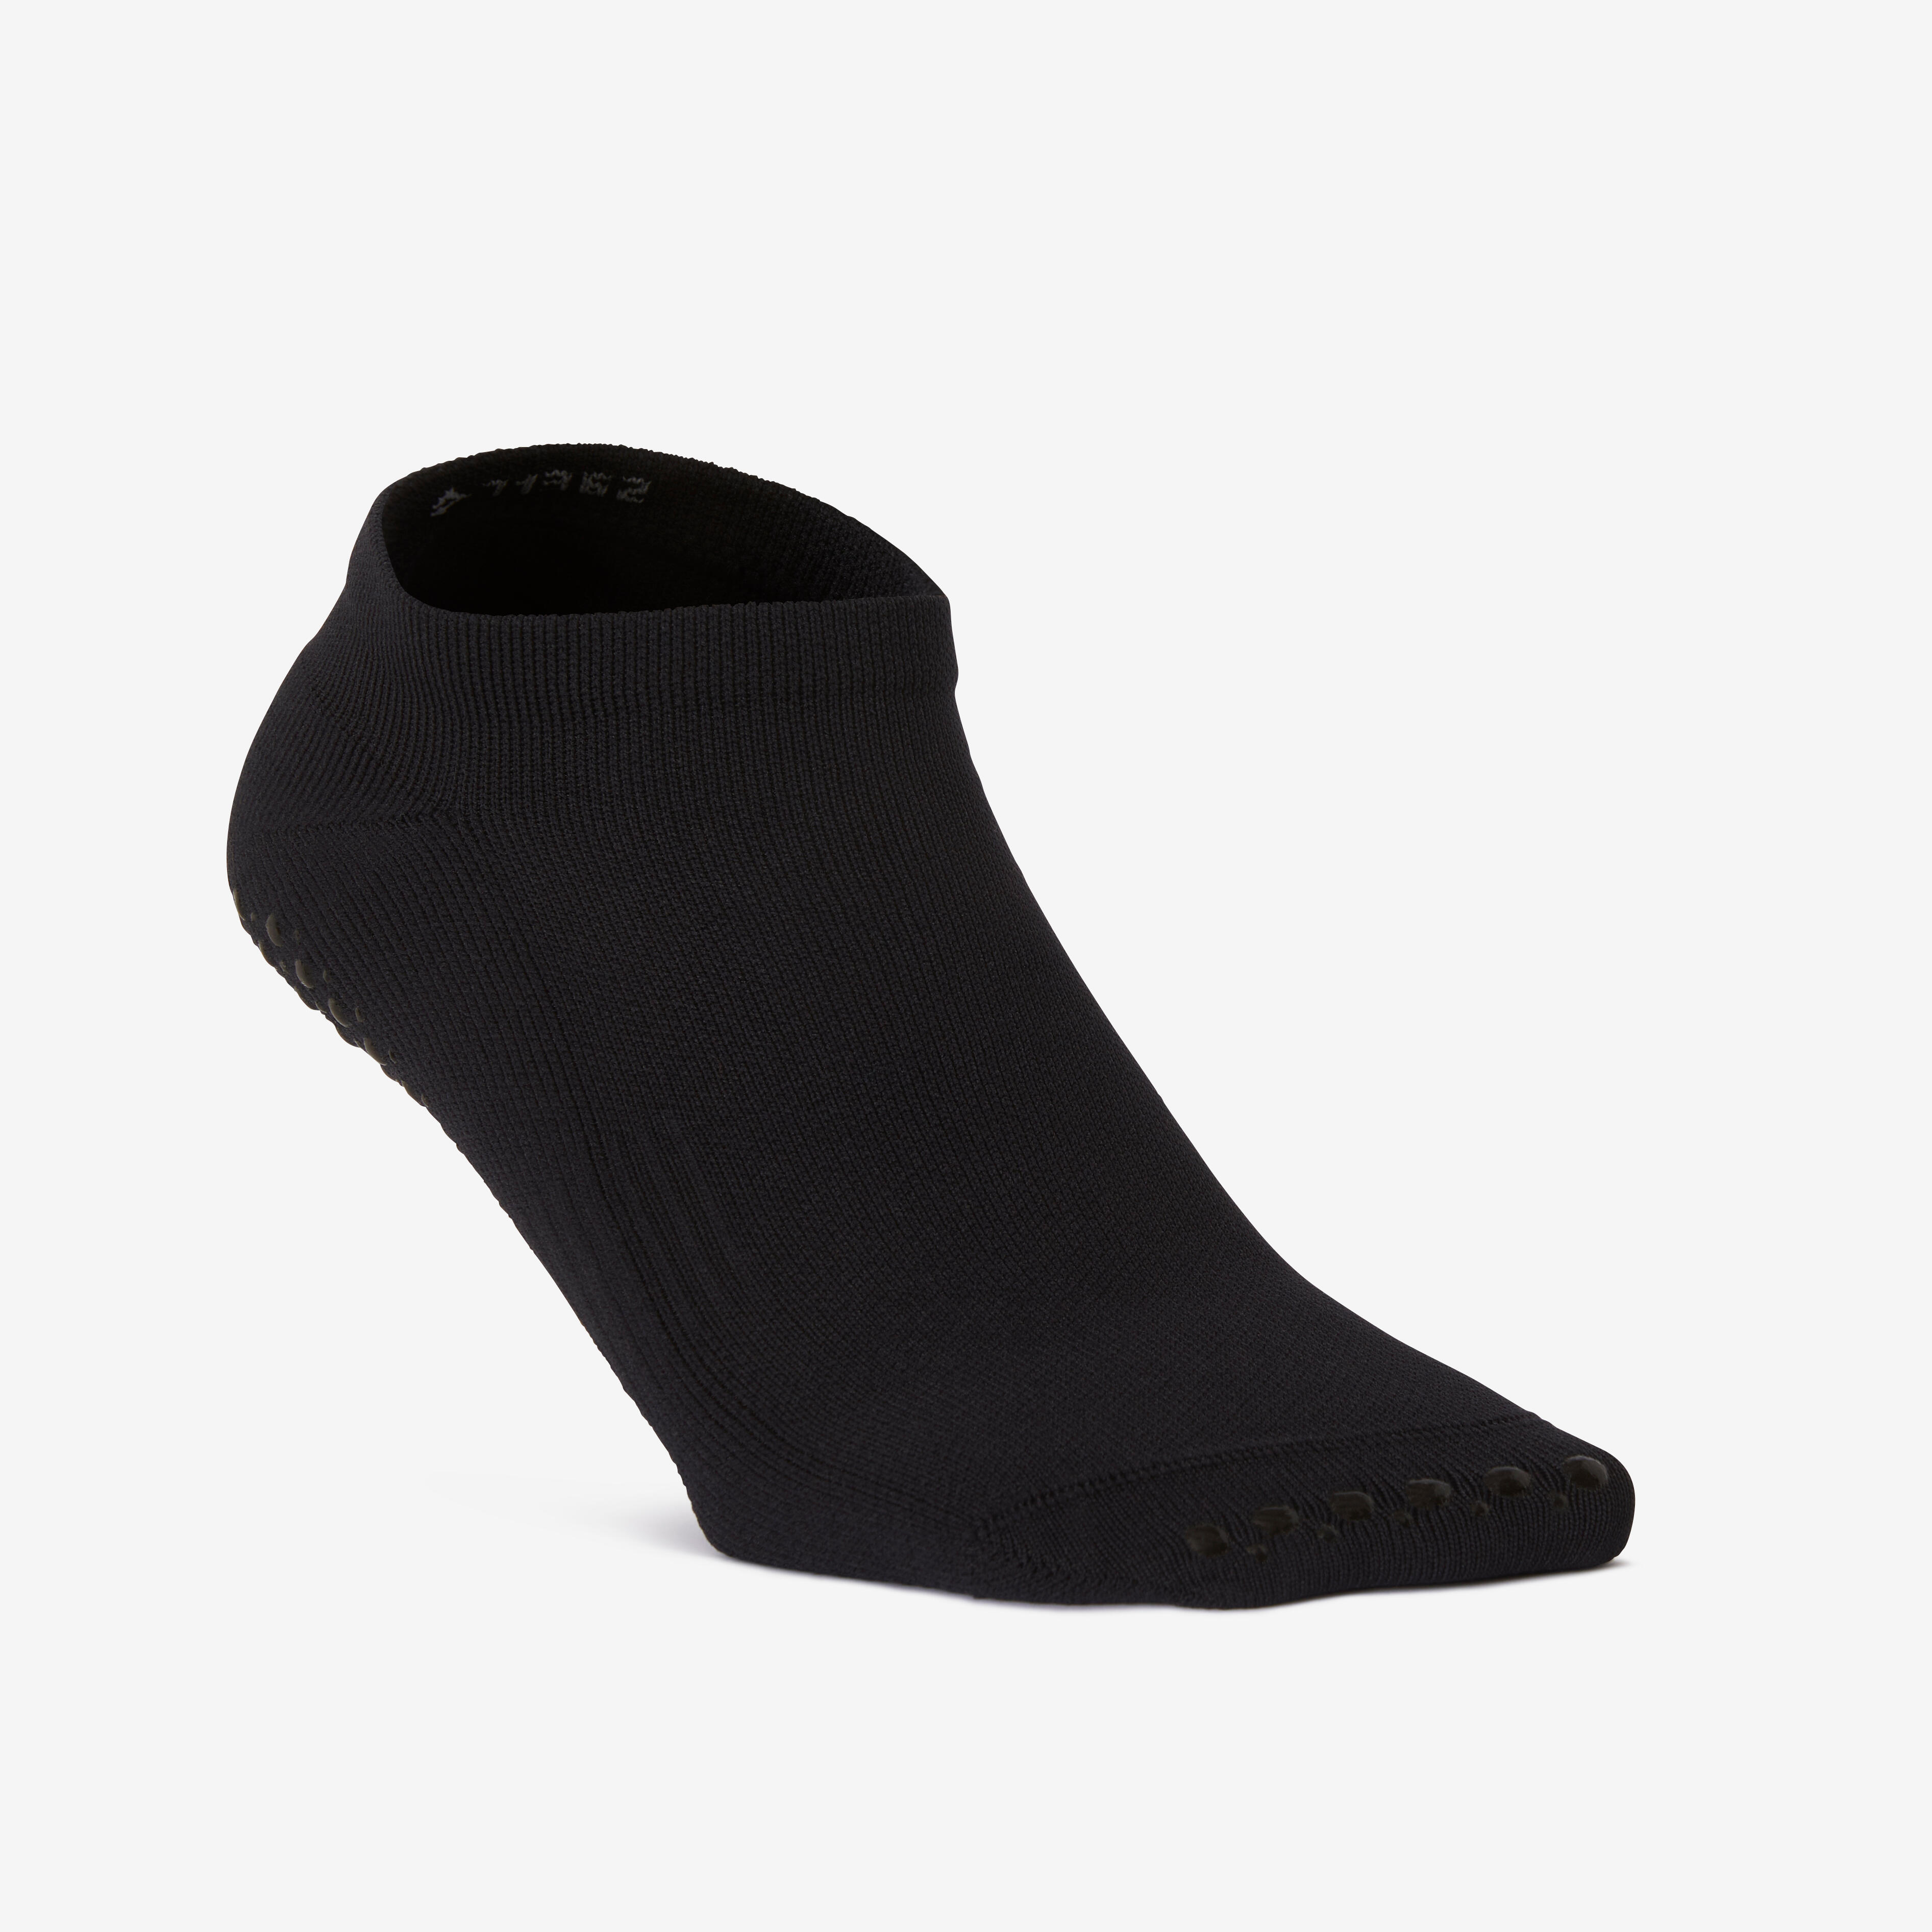 chaussettes antidérapantes fitness femme - 500 noir - domyos